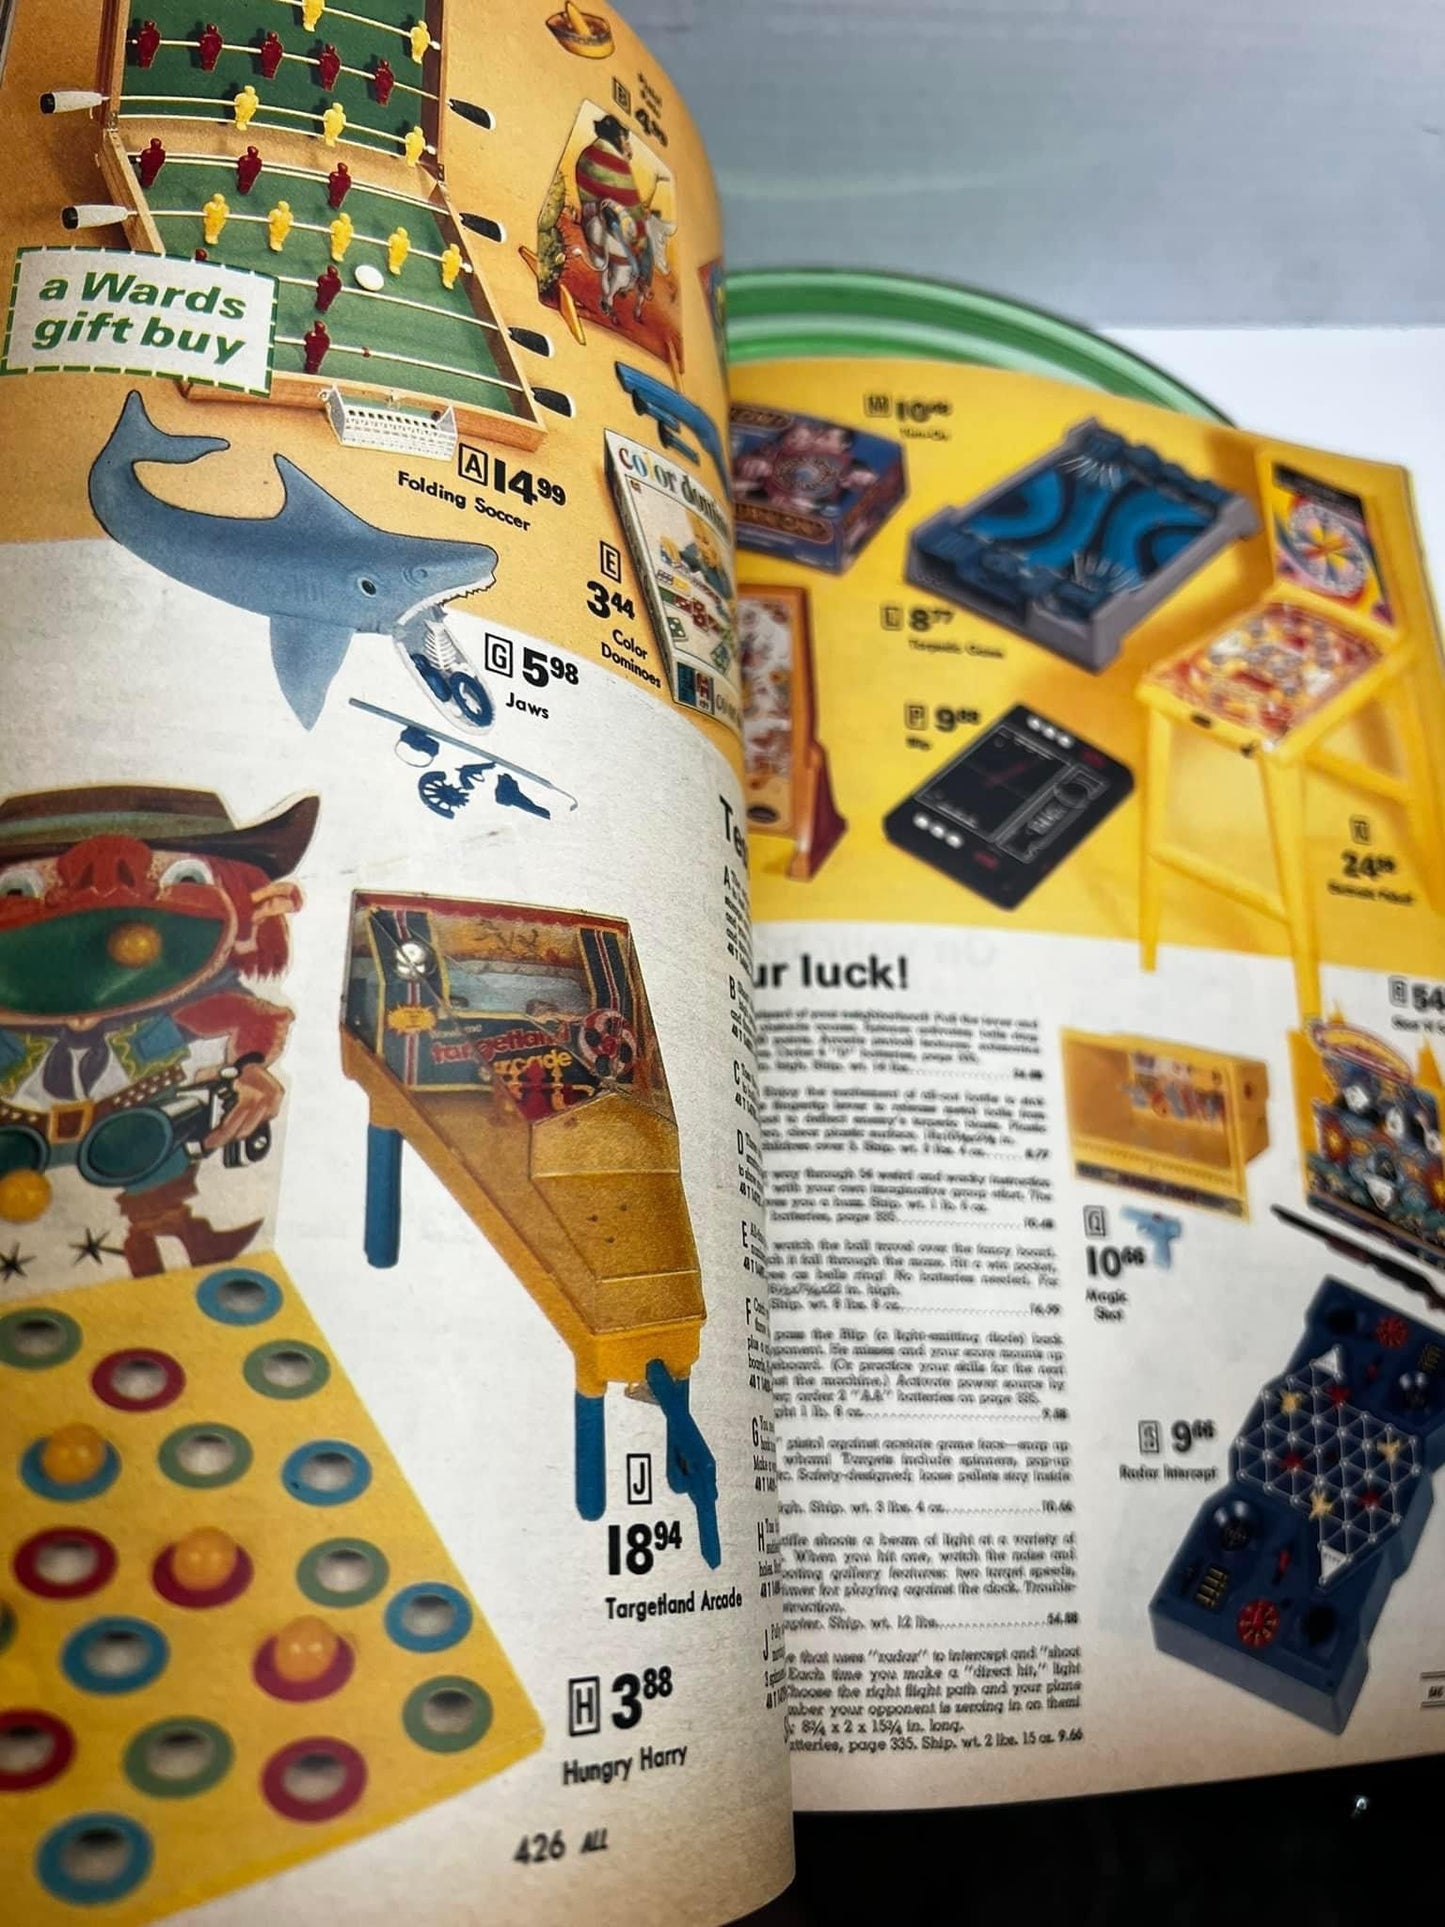 2 wards Christmas catalogs 1977 & 1979 vintage retro toys, furniture, clothes